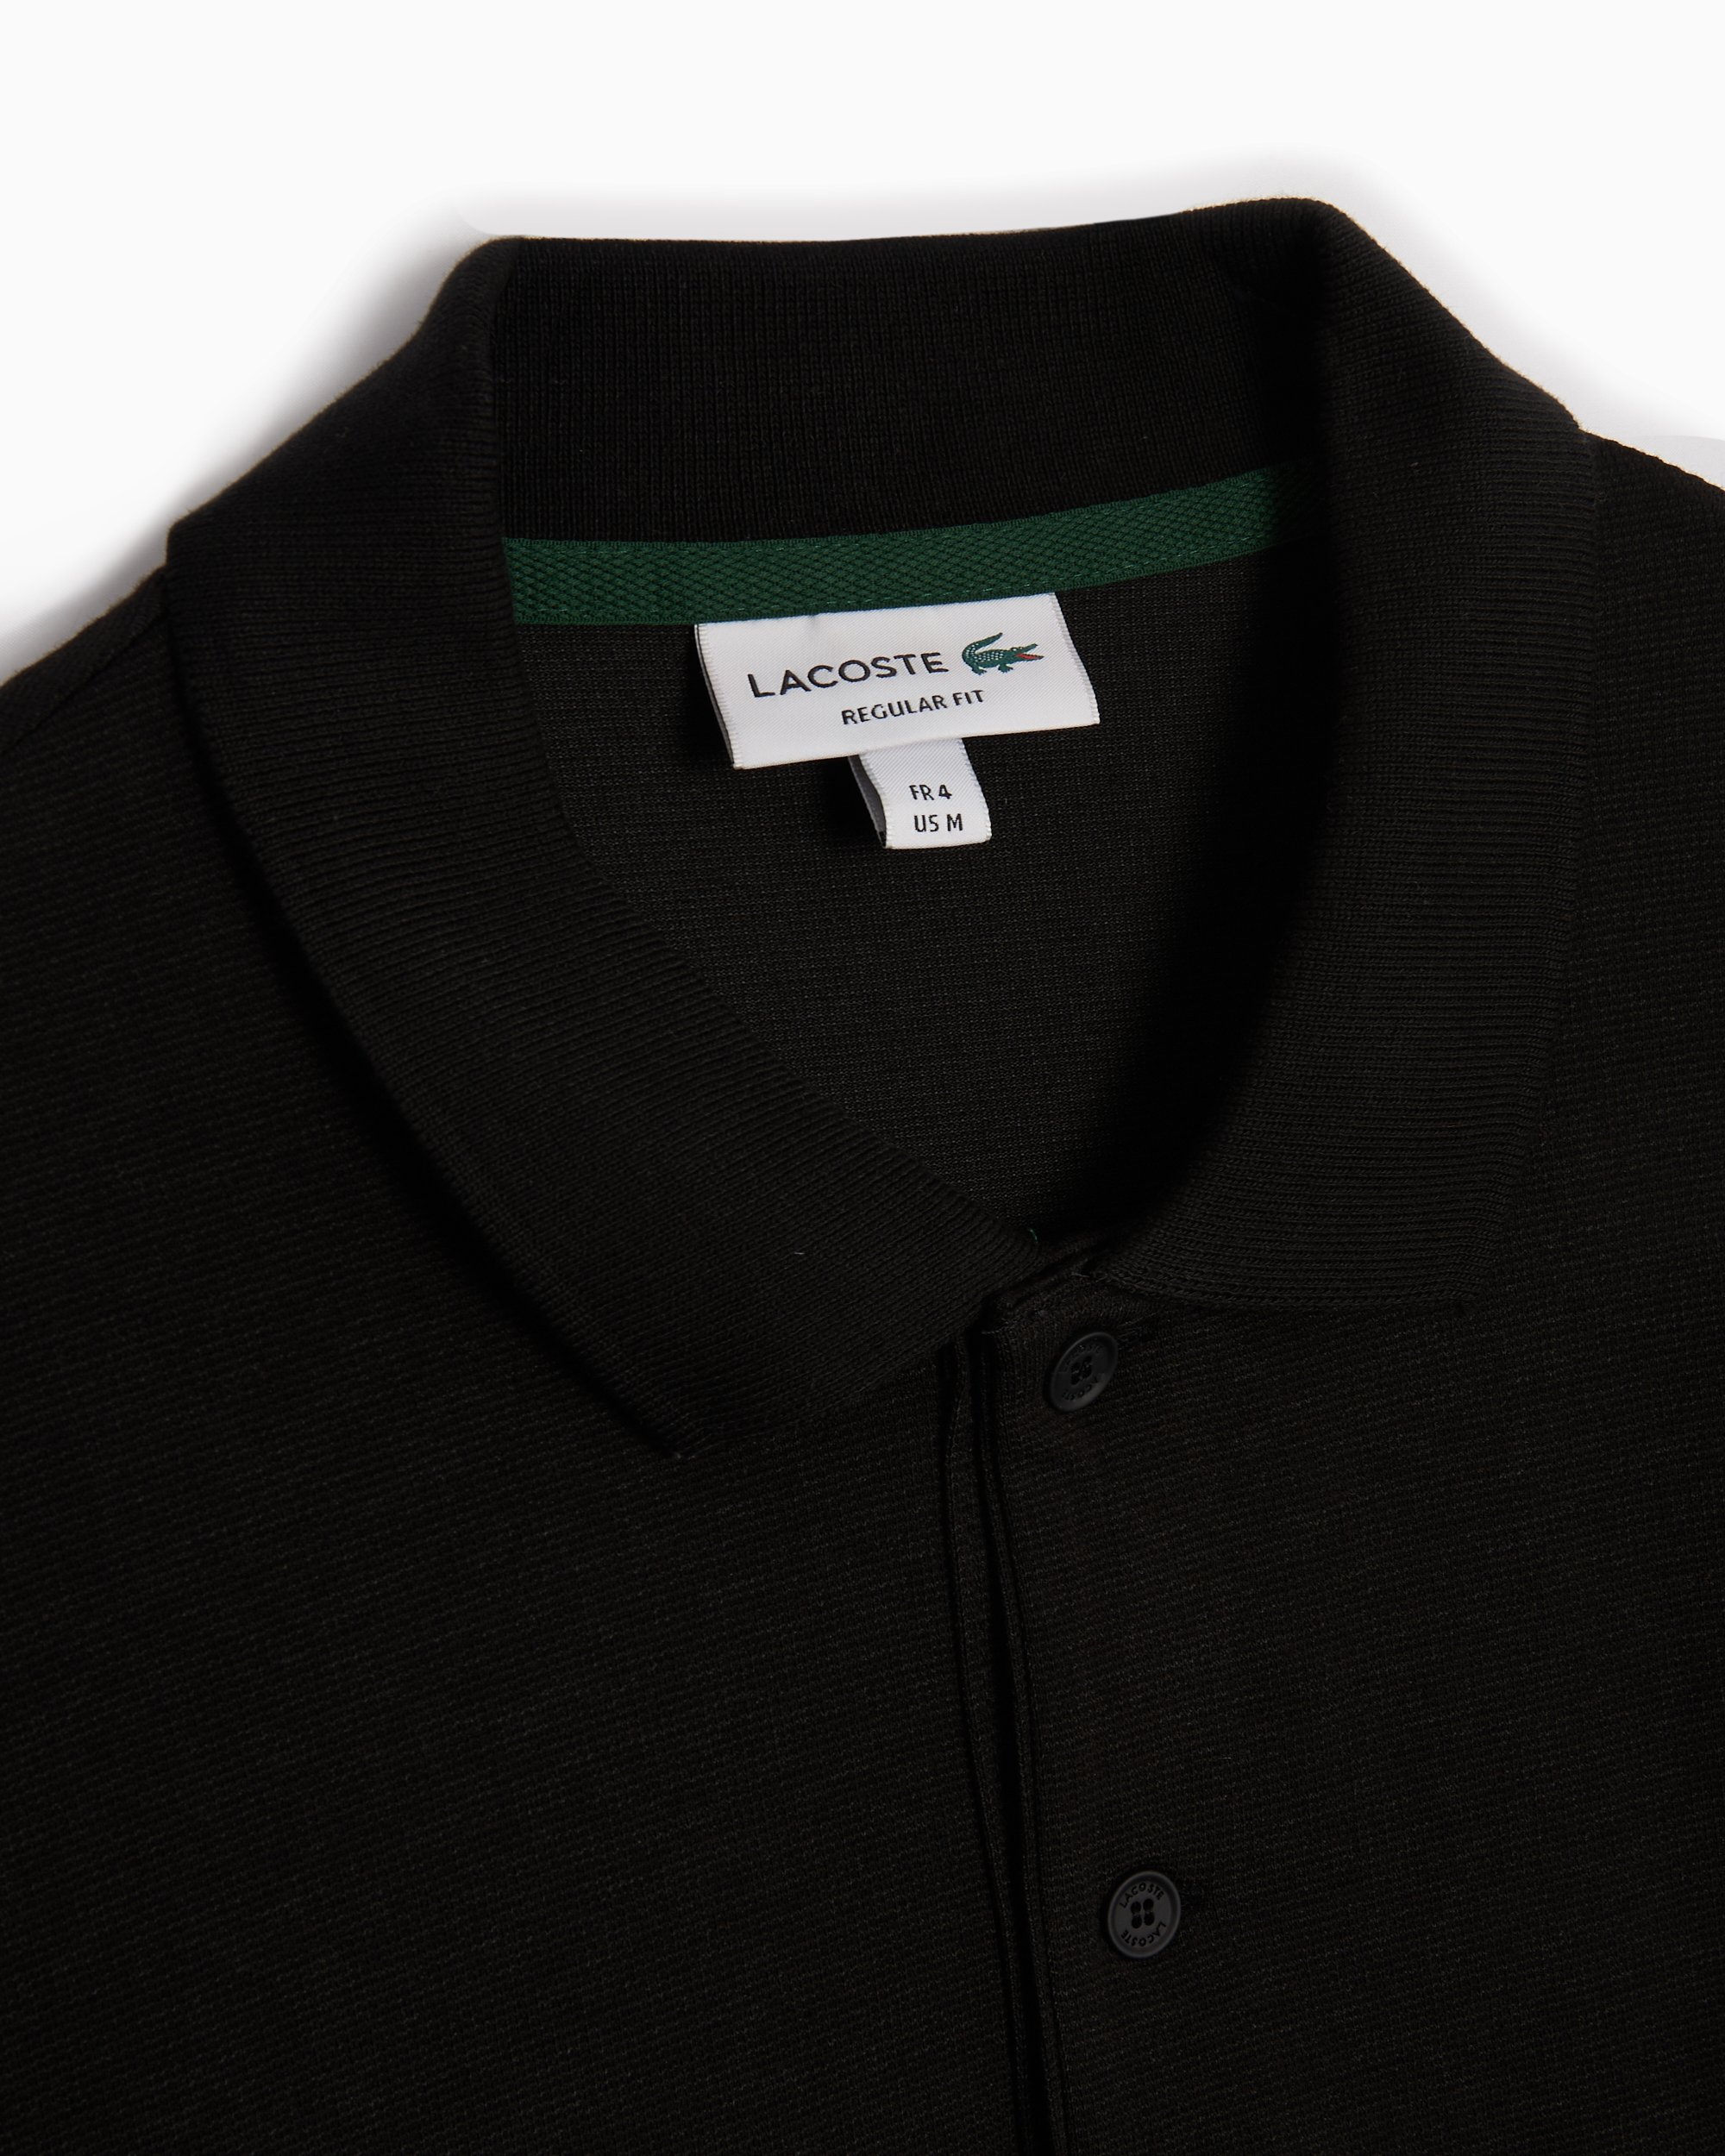 Lacoste Regular Fit Men's Polo Black DH0783-00-031| Buy Online at ...